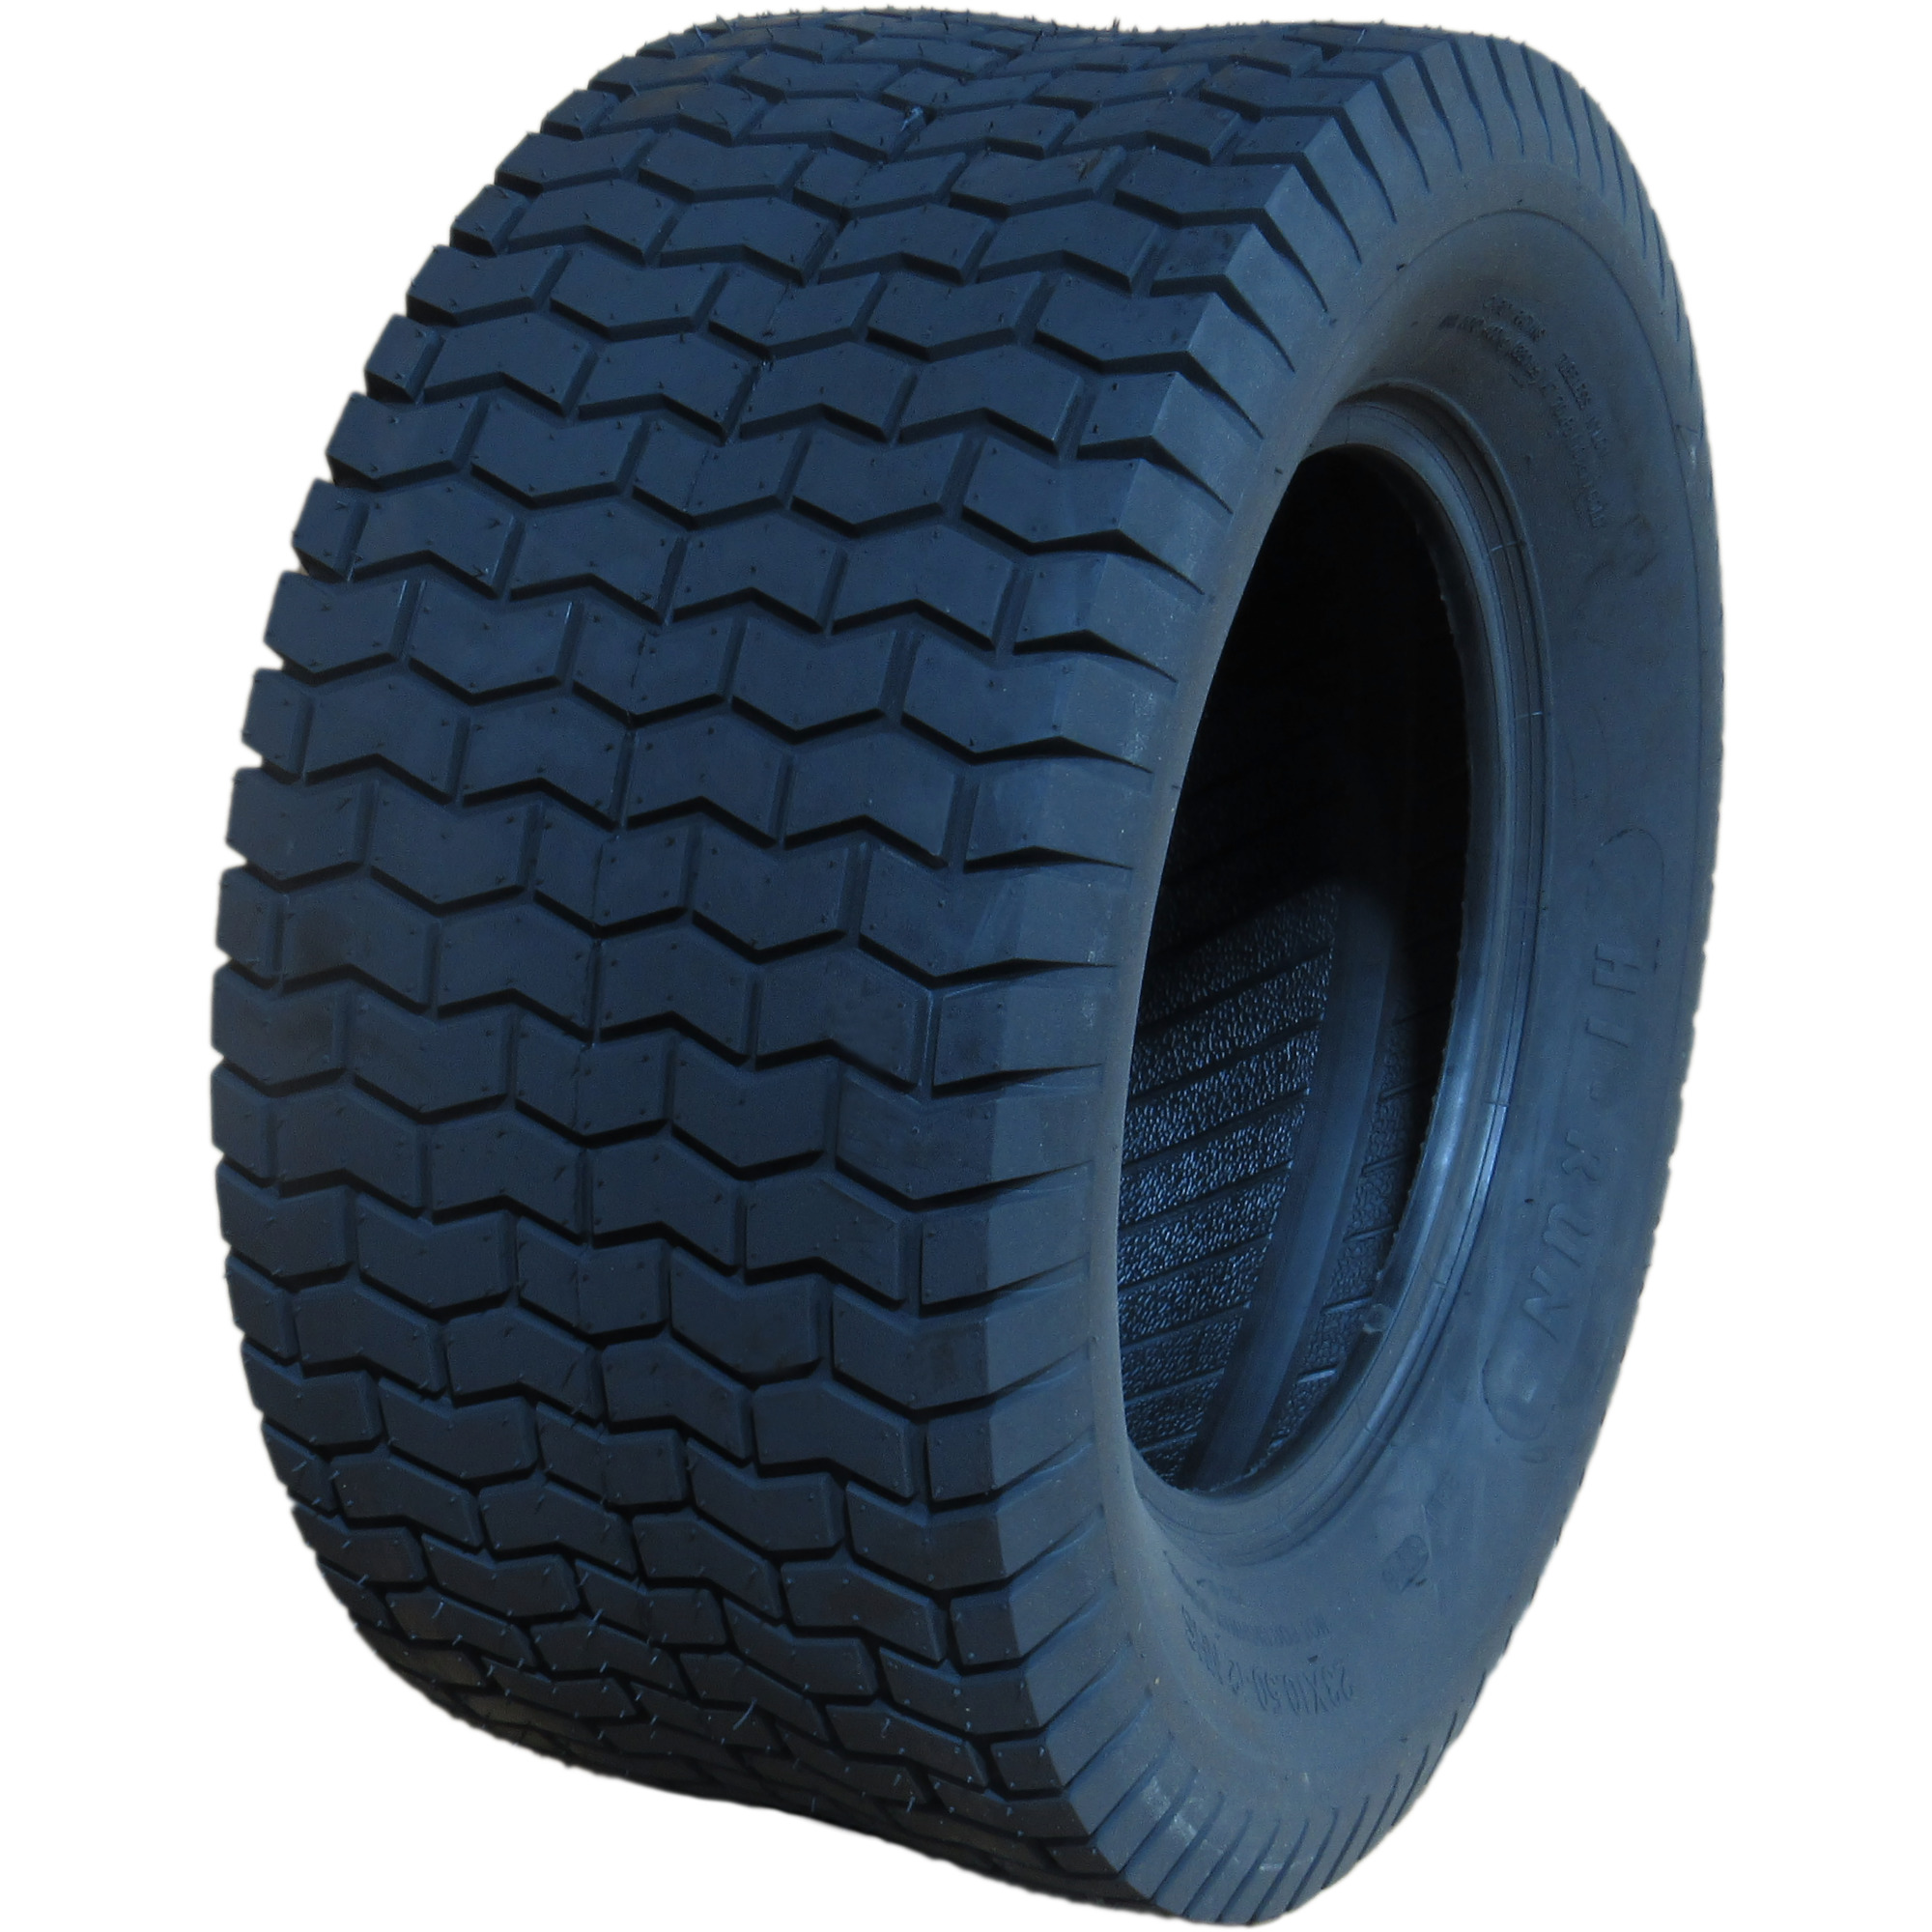 HI-RUN, Lawn Garden Tire, SU12 Turf II, Tire Size 23X10.5-12 Load Range Rating A, Model WD1284